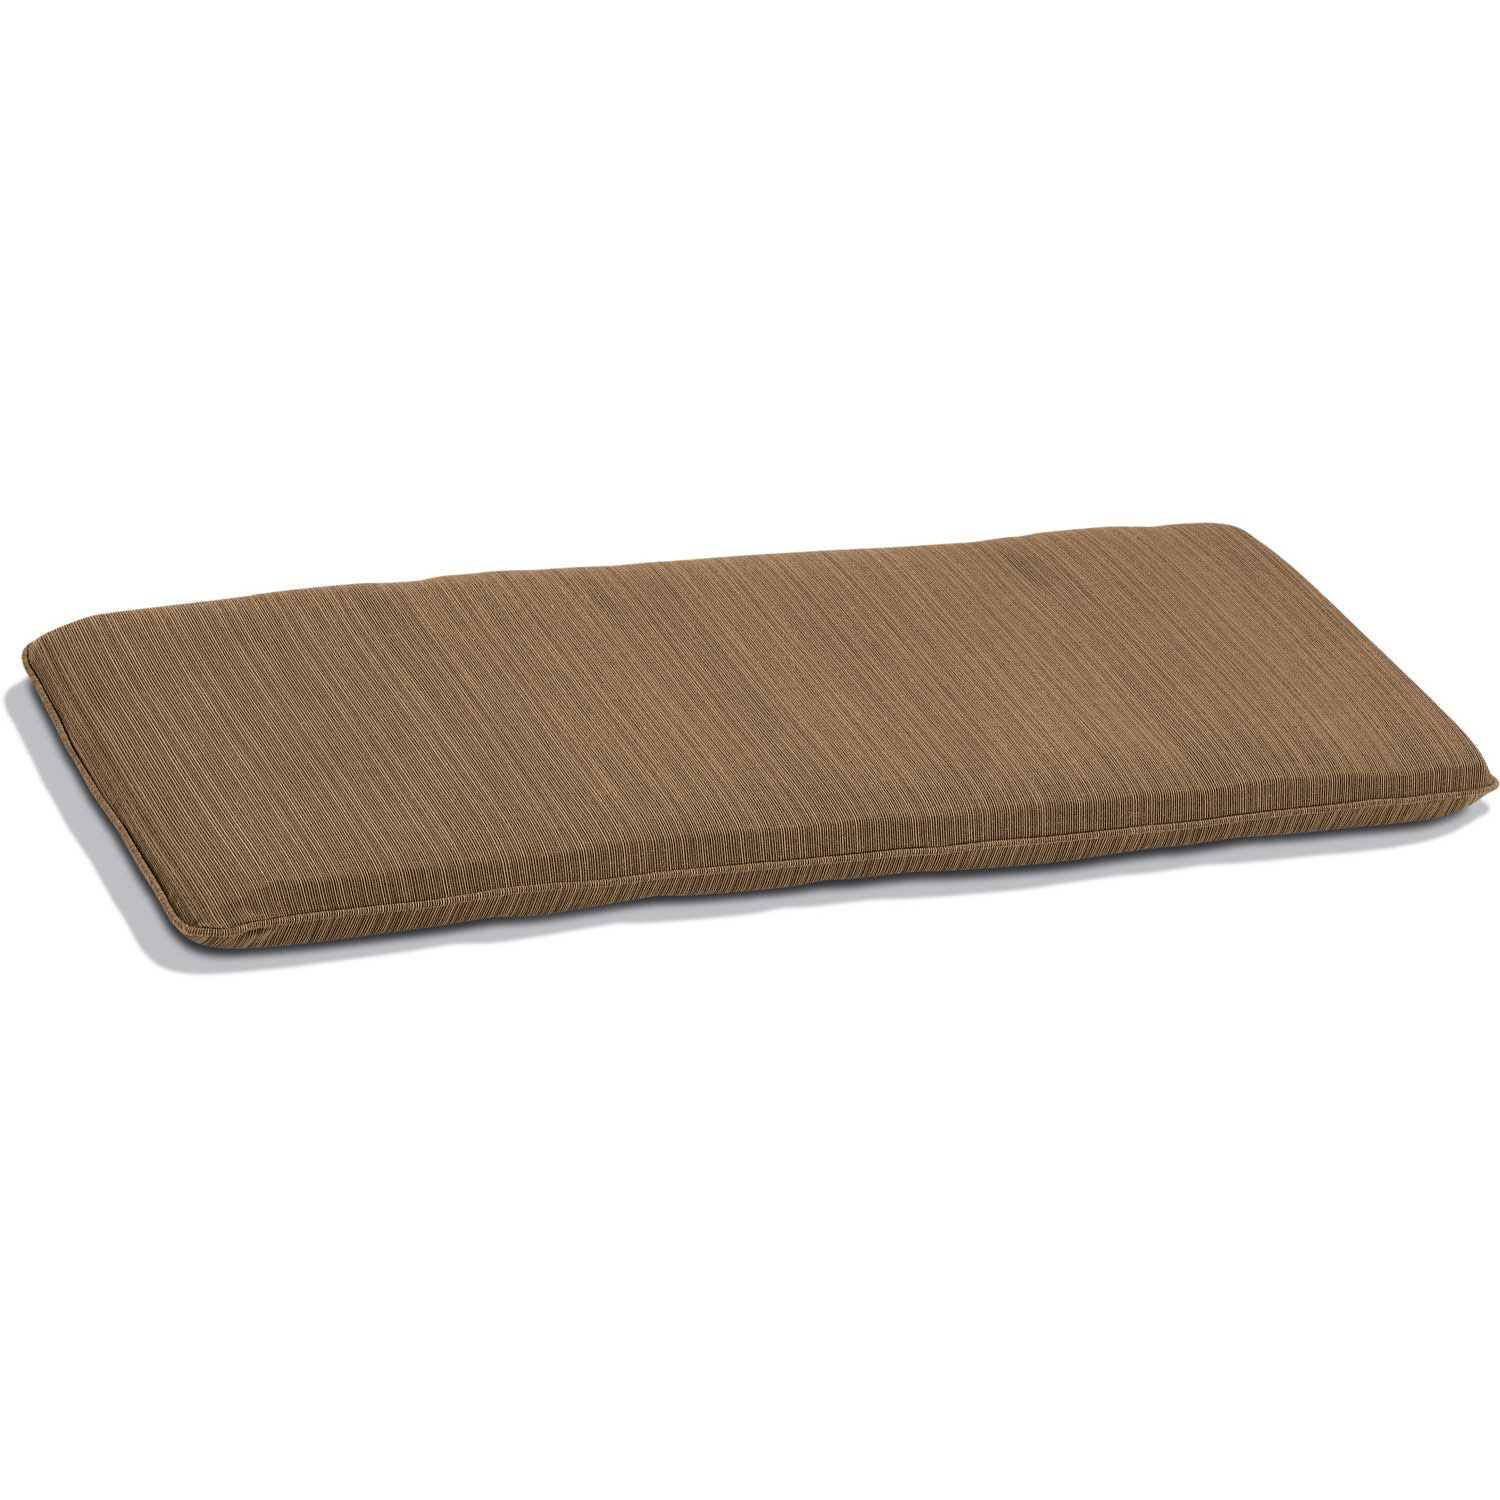 Backless Bench 4' Cushion - Dupione Walnut | eBay